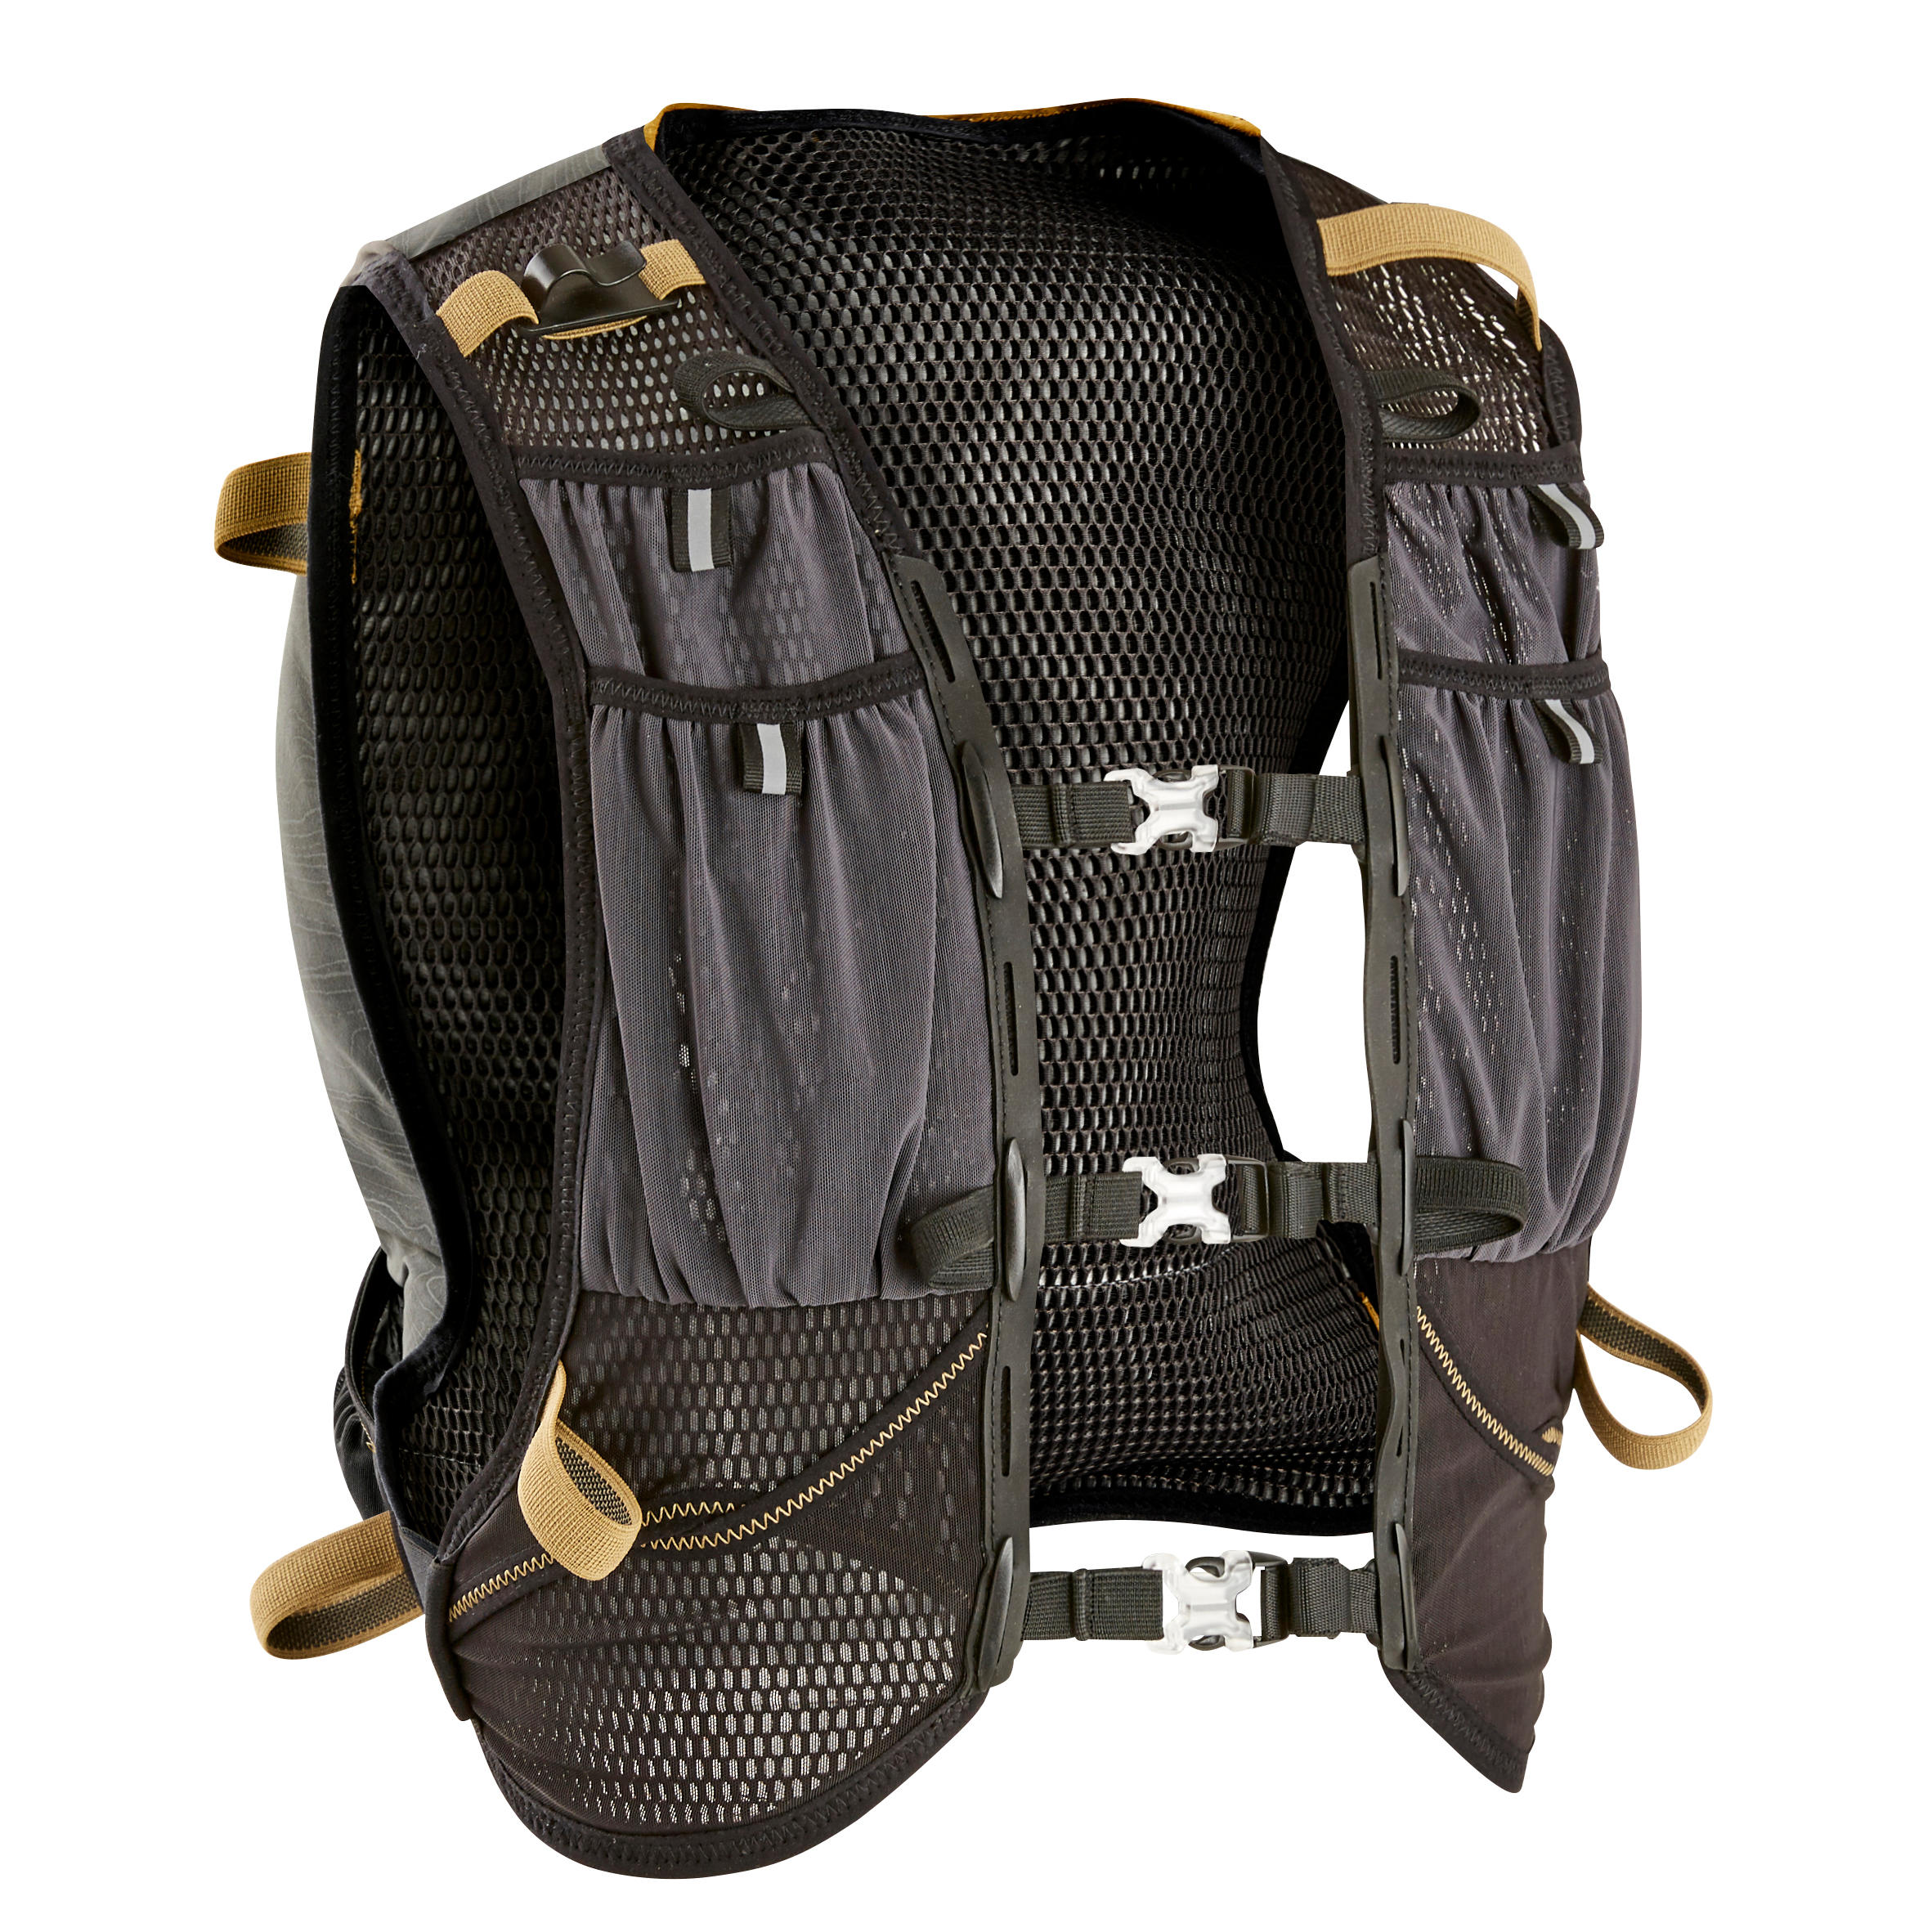 Oferta - Decathlon, mochila hidratación 10 L con bolsa de 1L en o negro | MTBeros - Tu foro de MTB